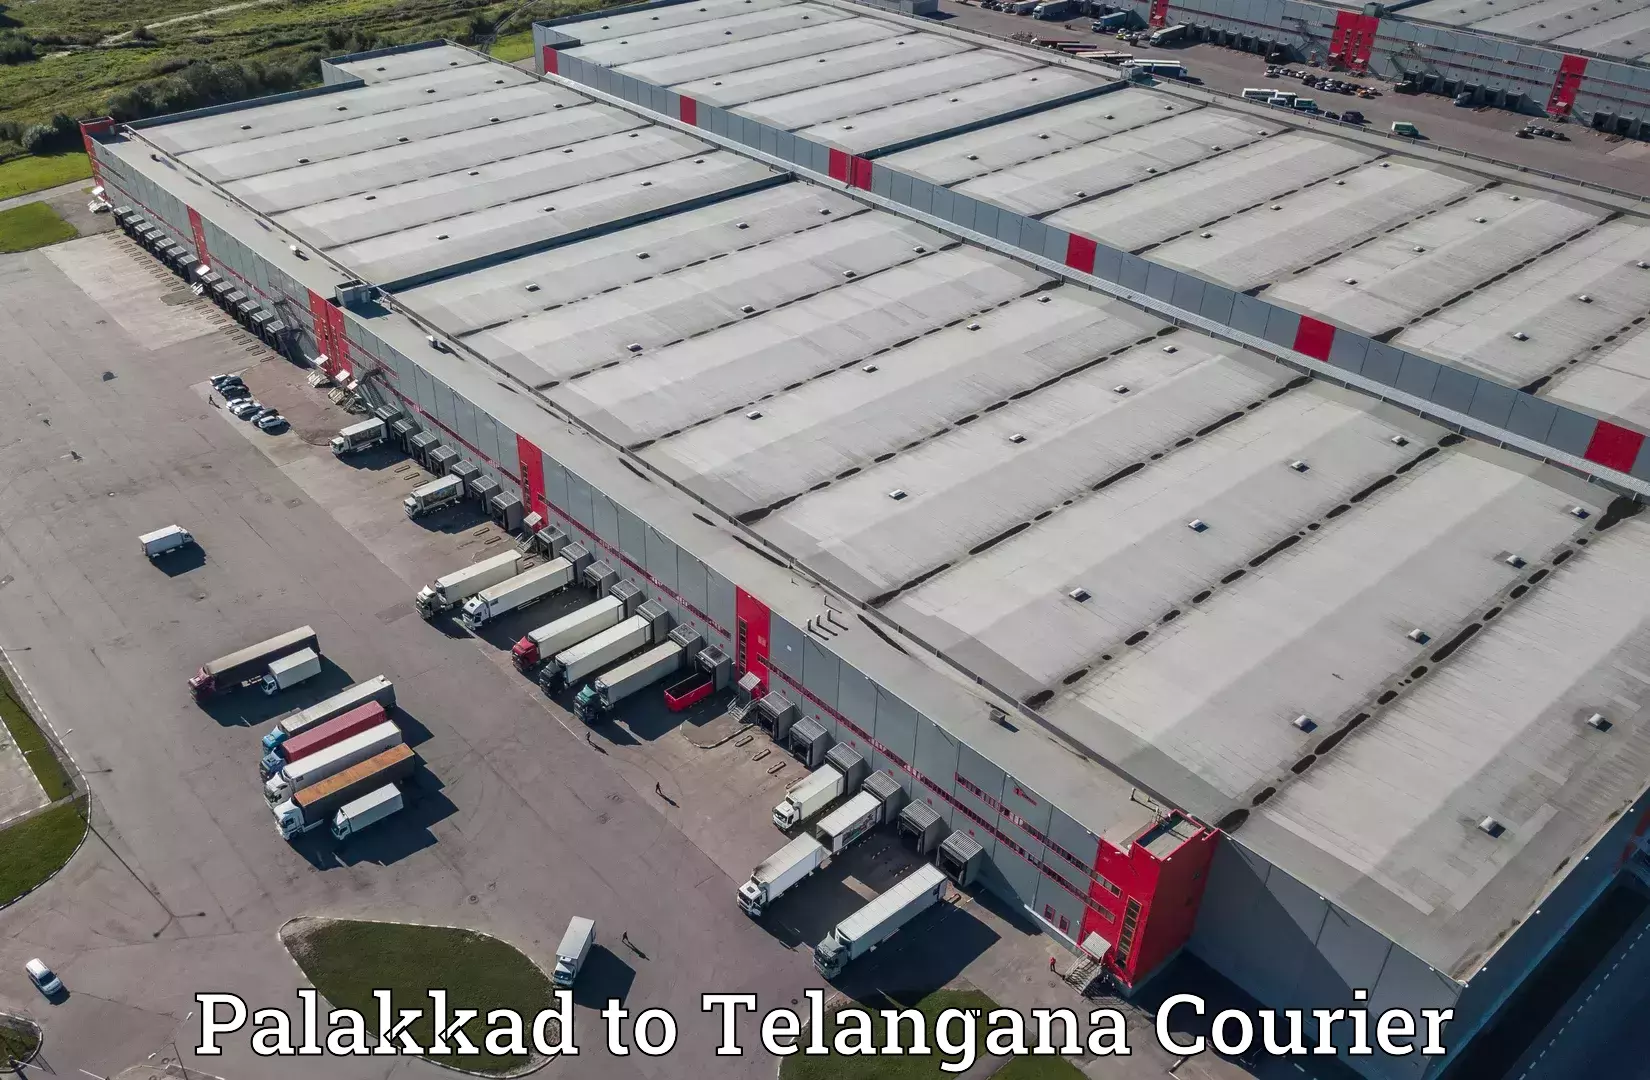 High-speed parcel service Palakkad to Tallada